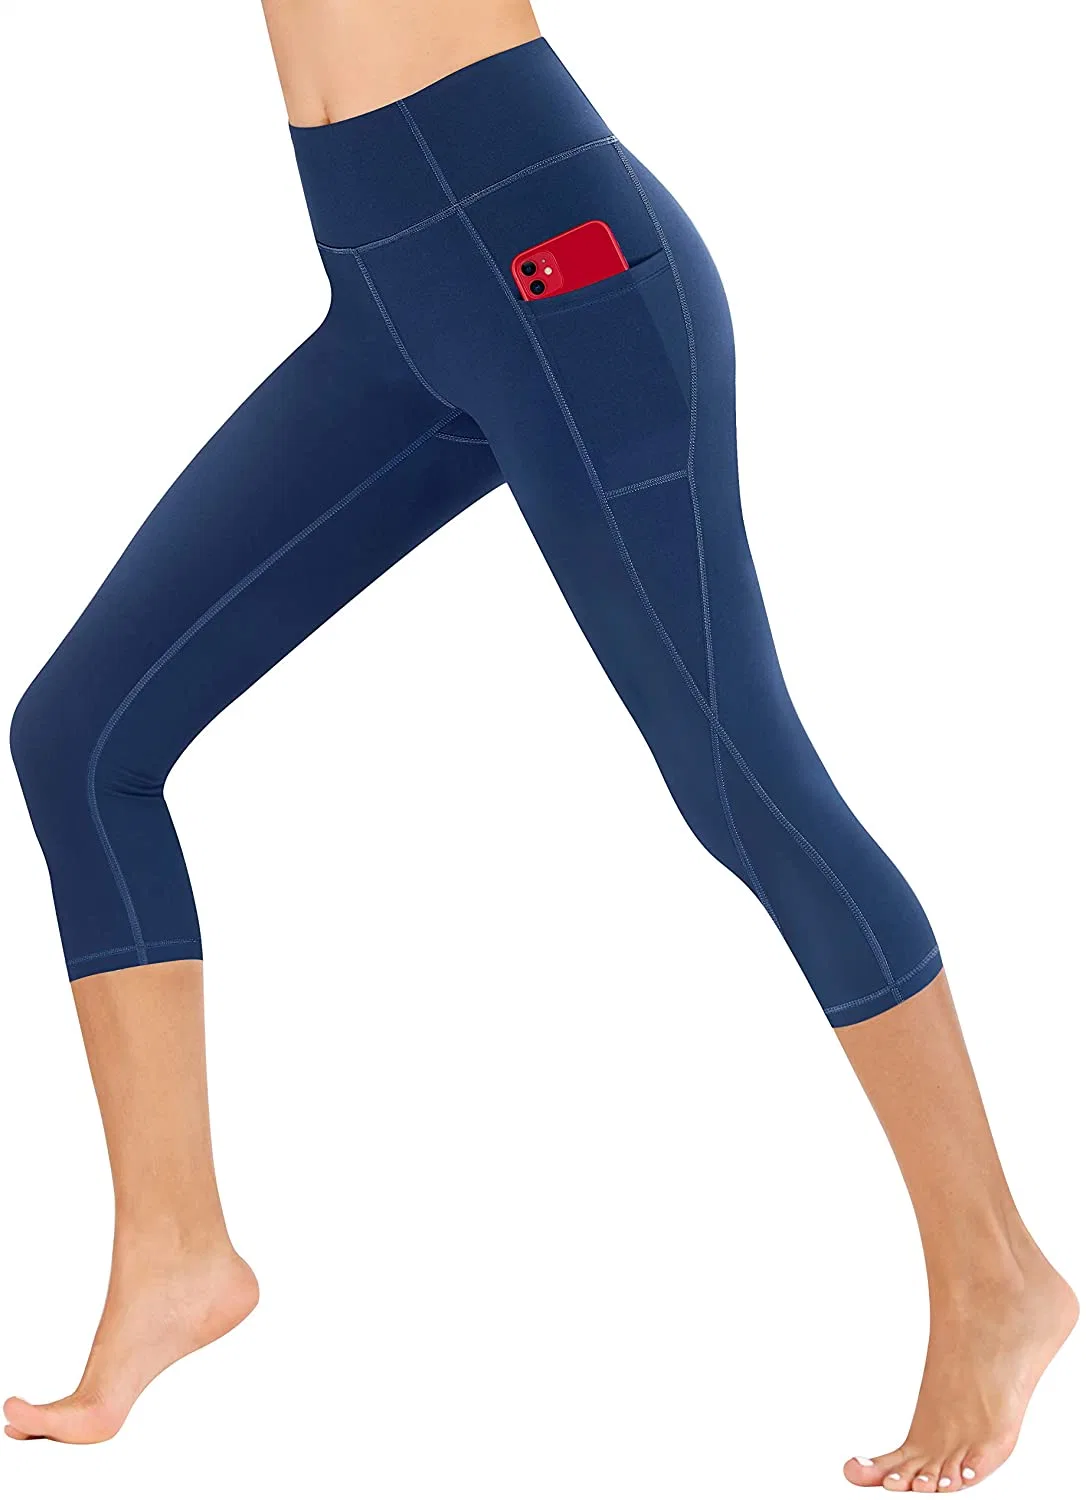 Waterproof Legging Clothing Home Gym Yoga Pants Wear for Women